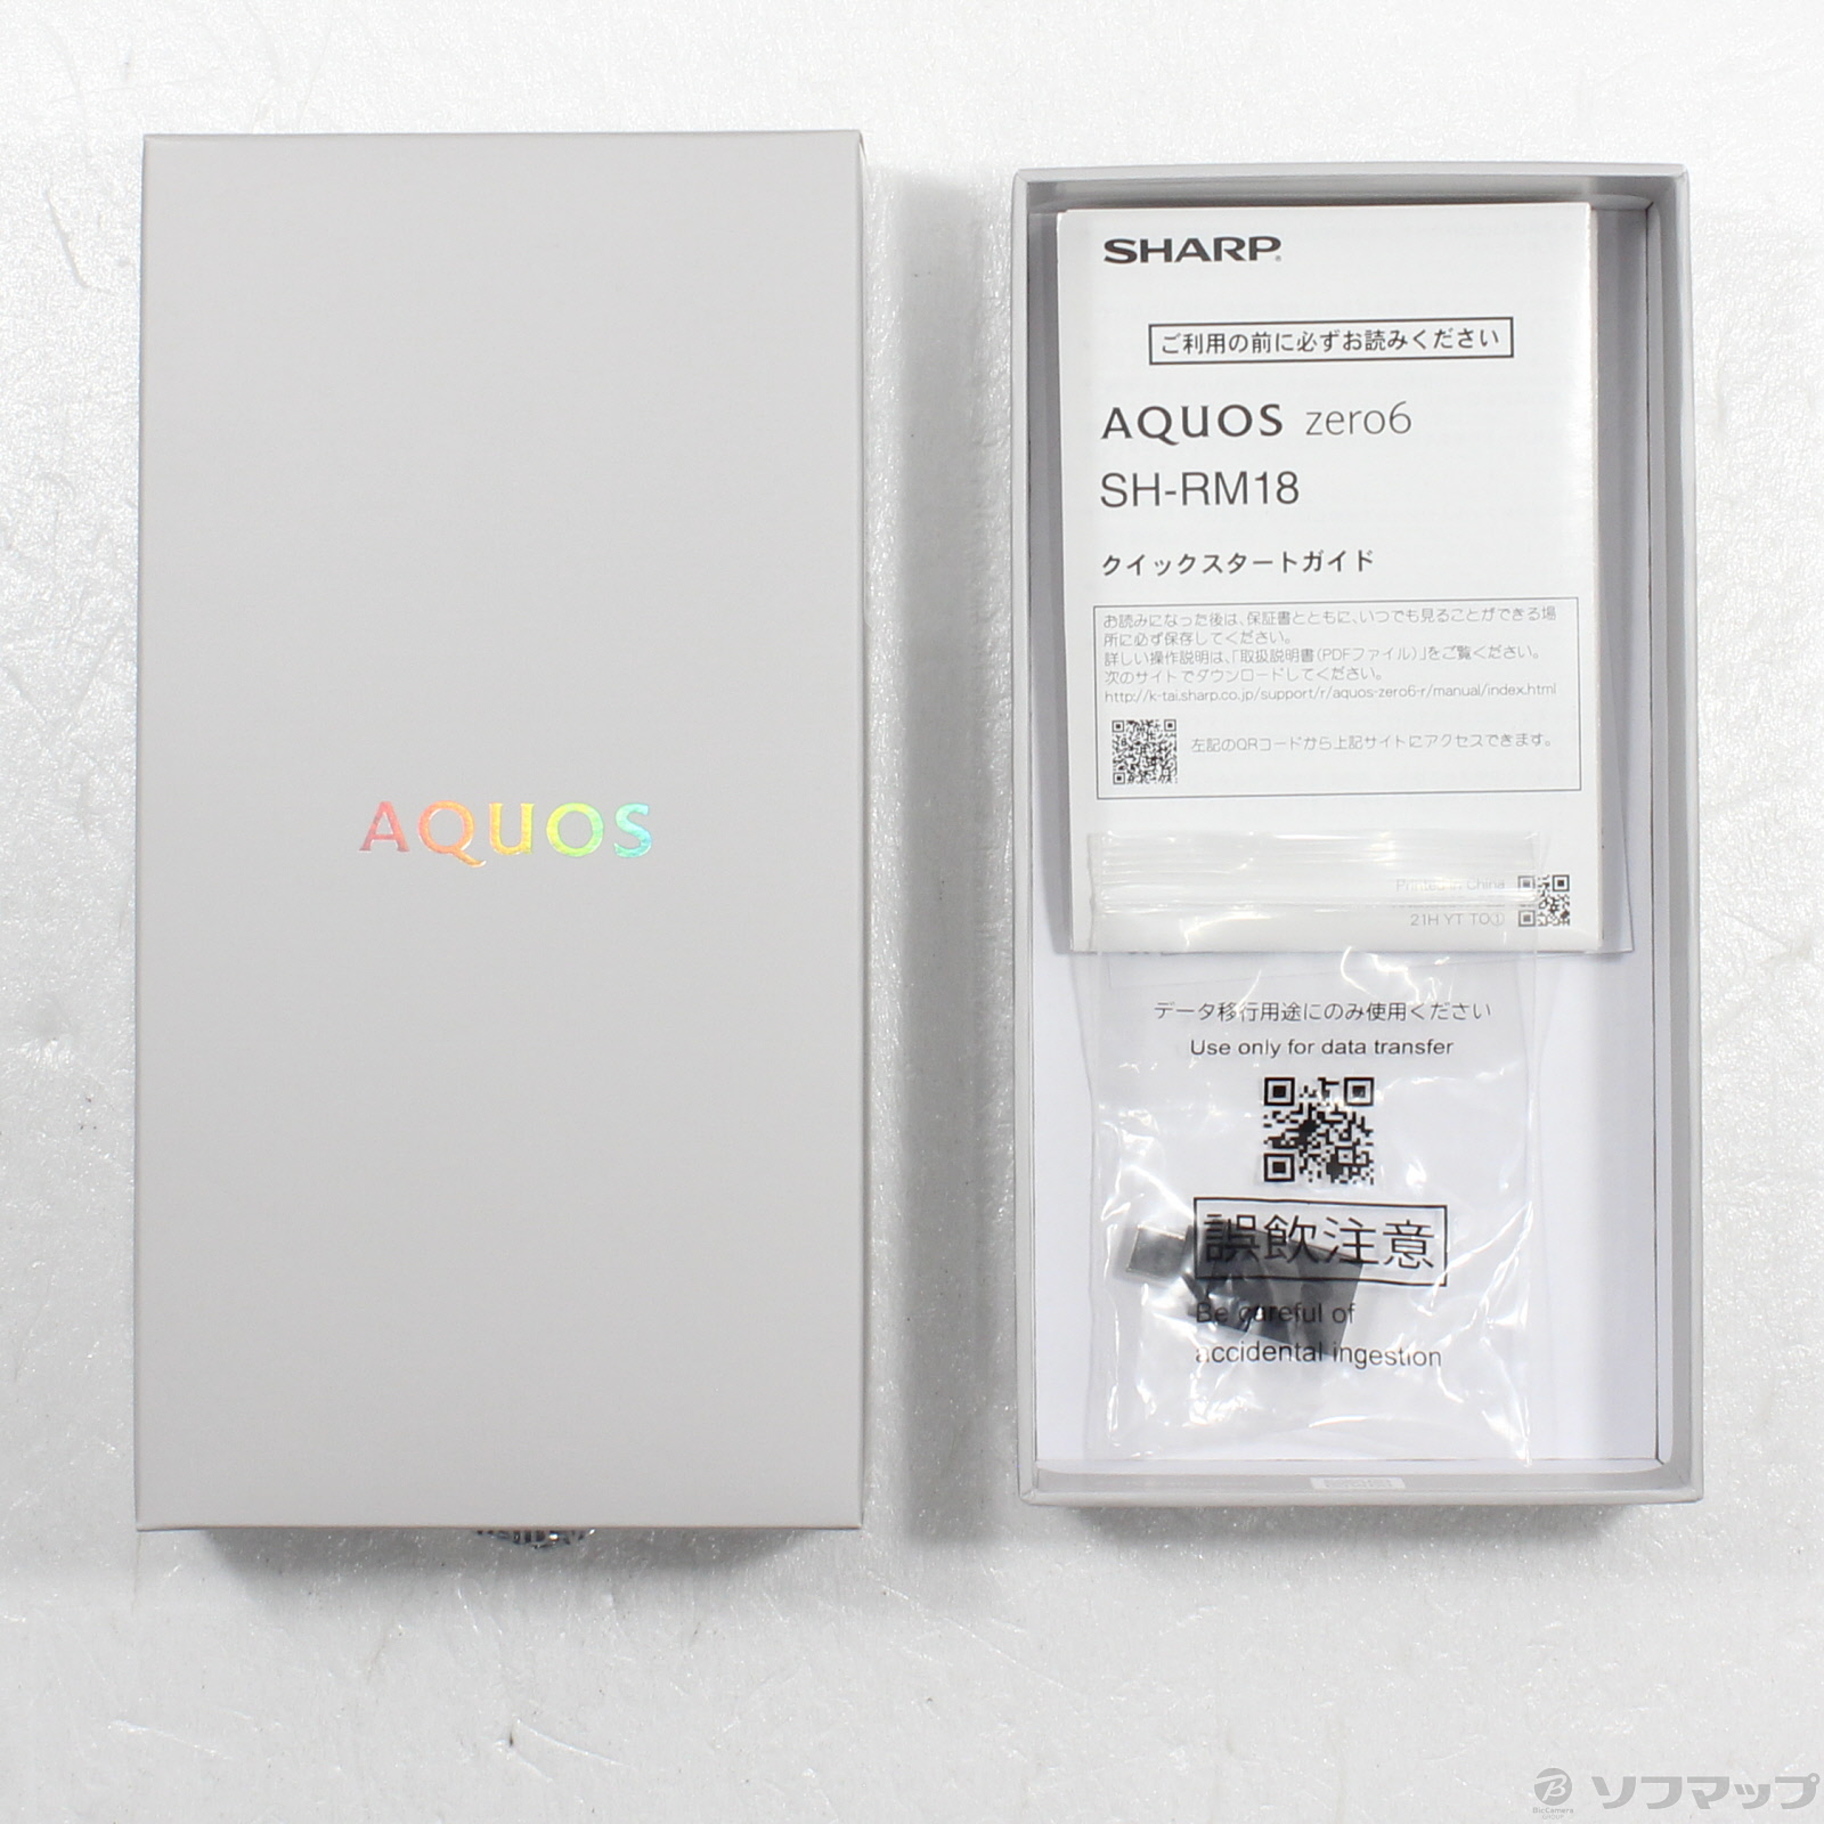 AQUOS zero6 楽天版 128GB パープル SH-RM18 SIMフリー